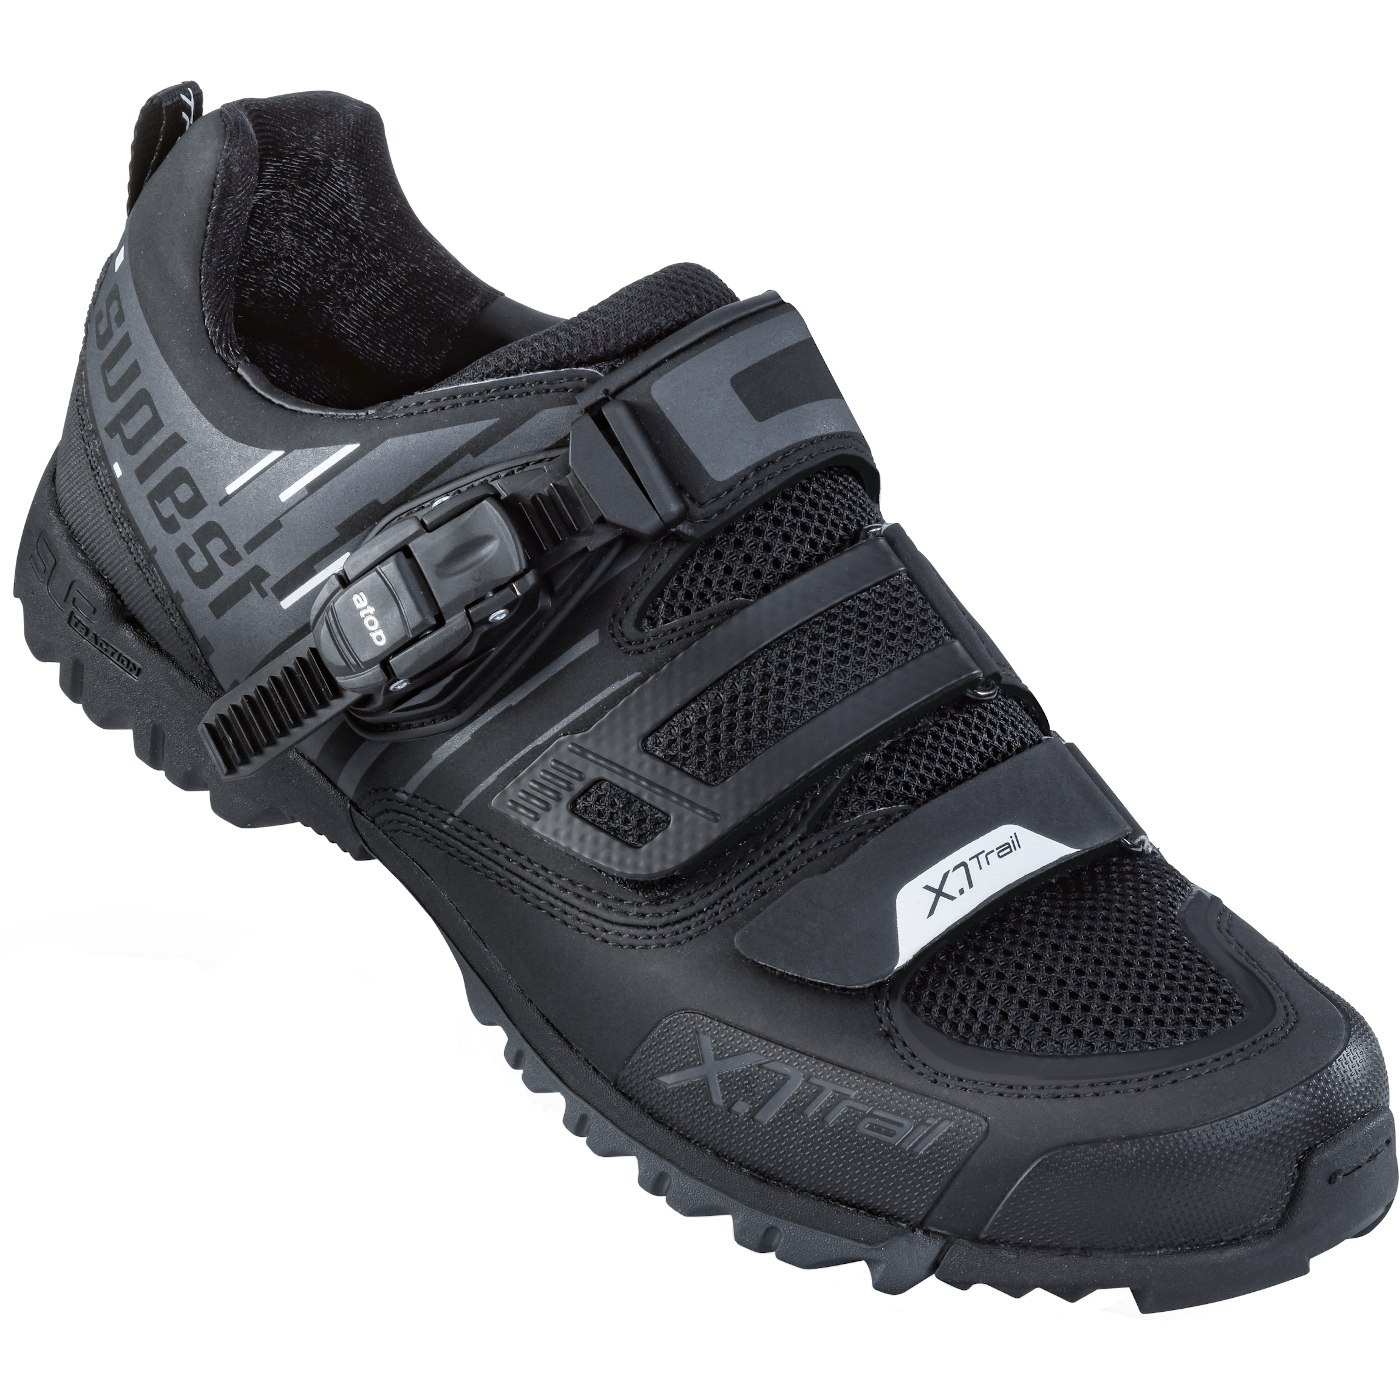 Productfoto van Suplest Offroad Performance X.1 Trail MTB Shoe - Black / Anthacite 03.036.